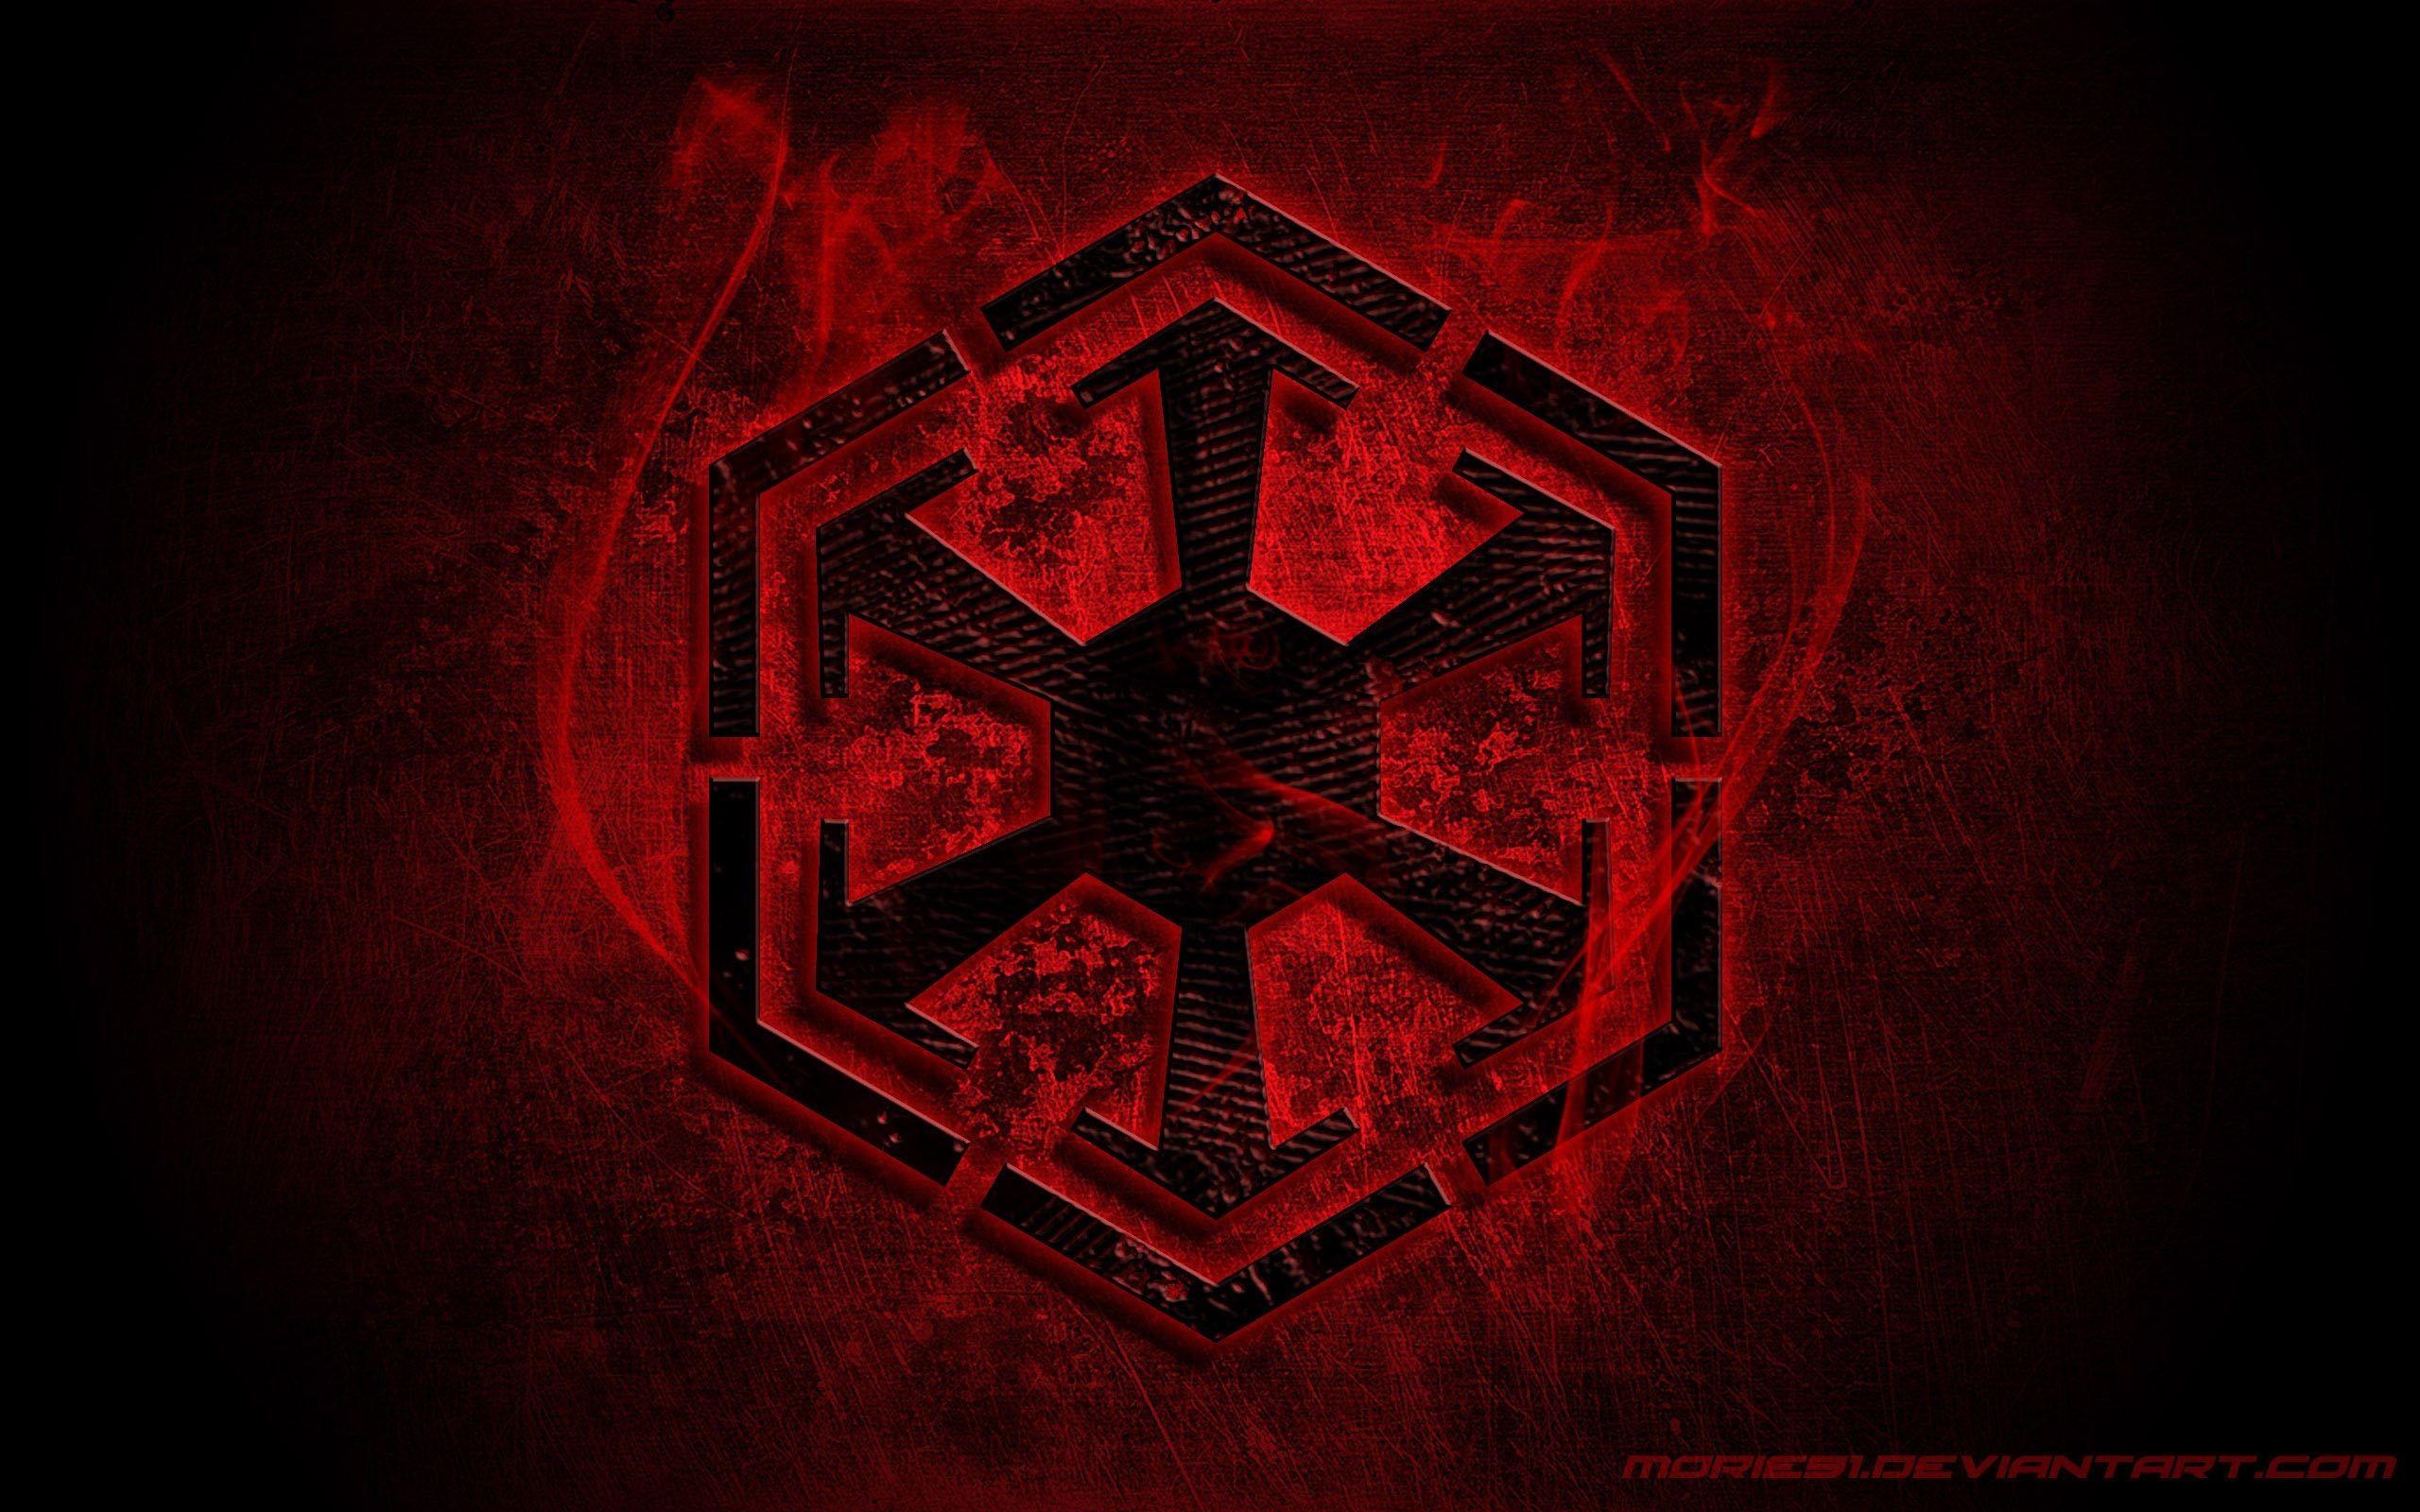 Imperial logo | Star wars tattoo, Star wars background, Star wars books